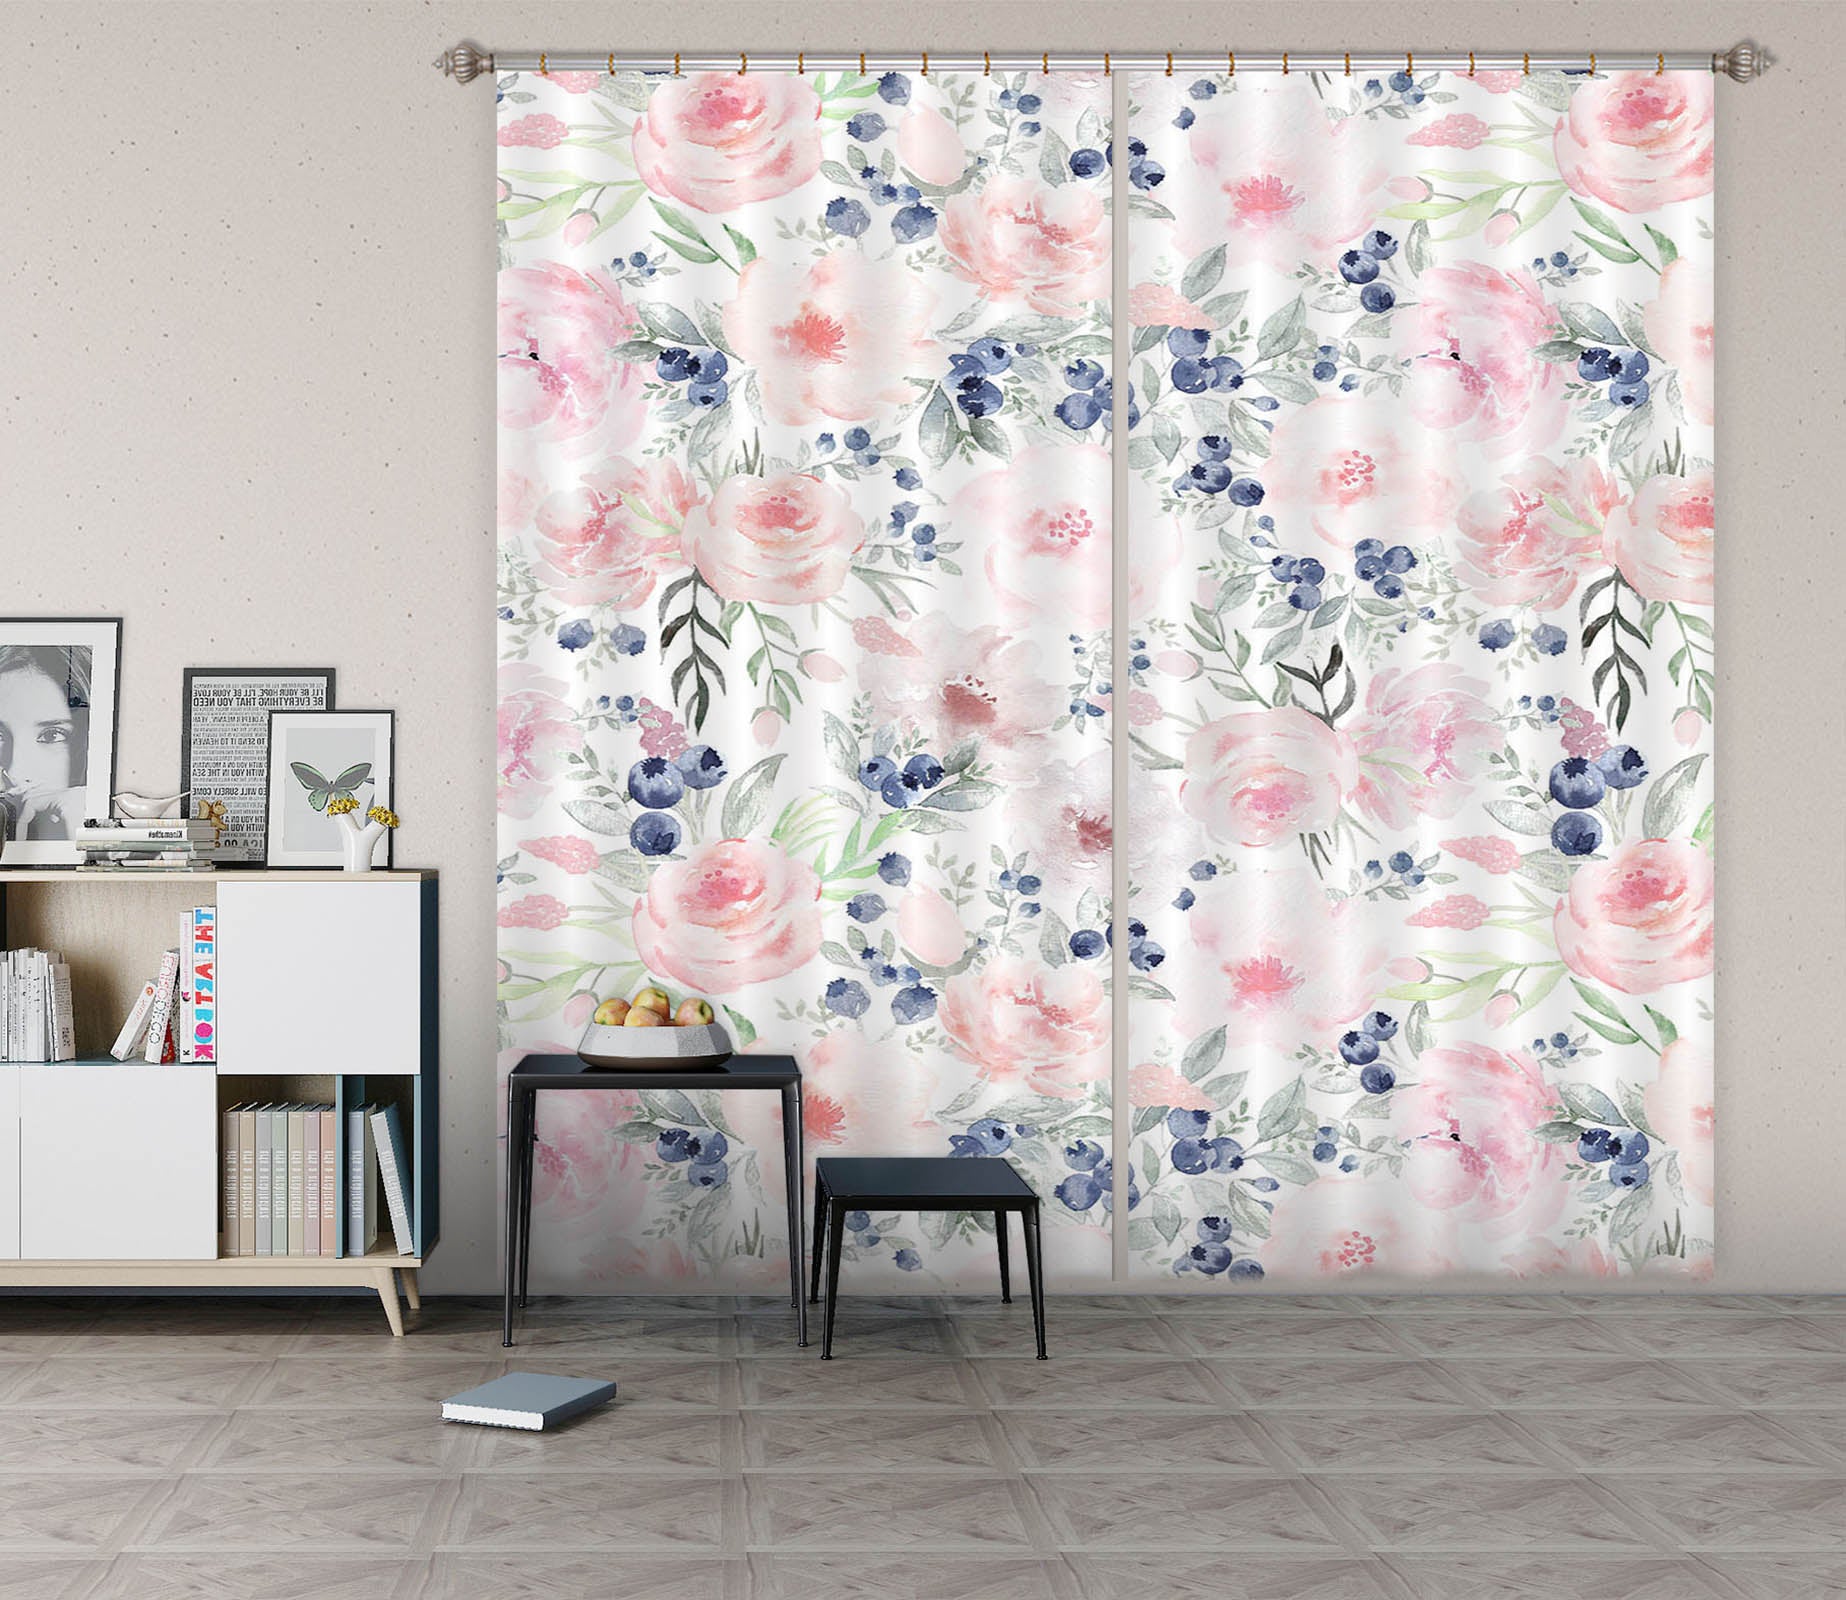 3D Blueberry Flower 268 Uta Naumann Curtain Curtains Drapes